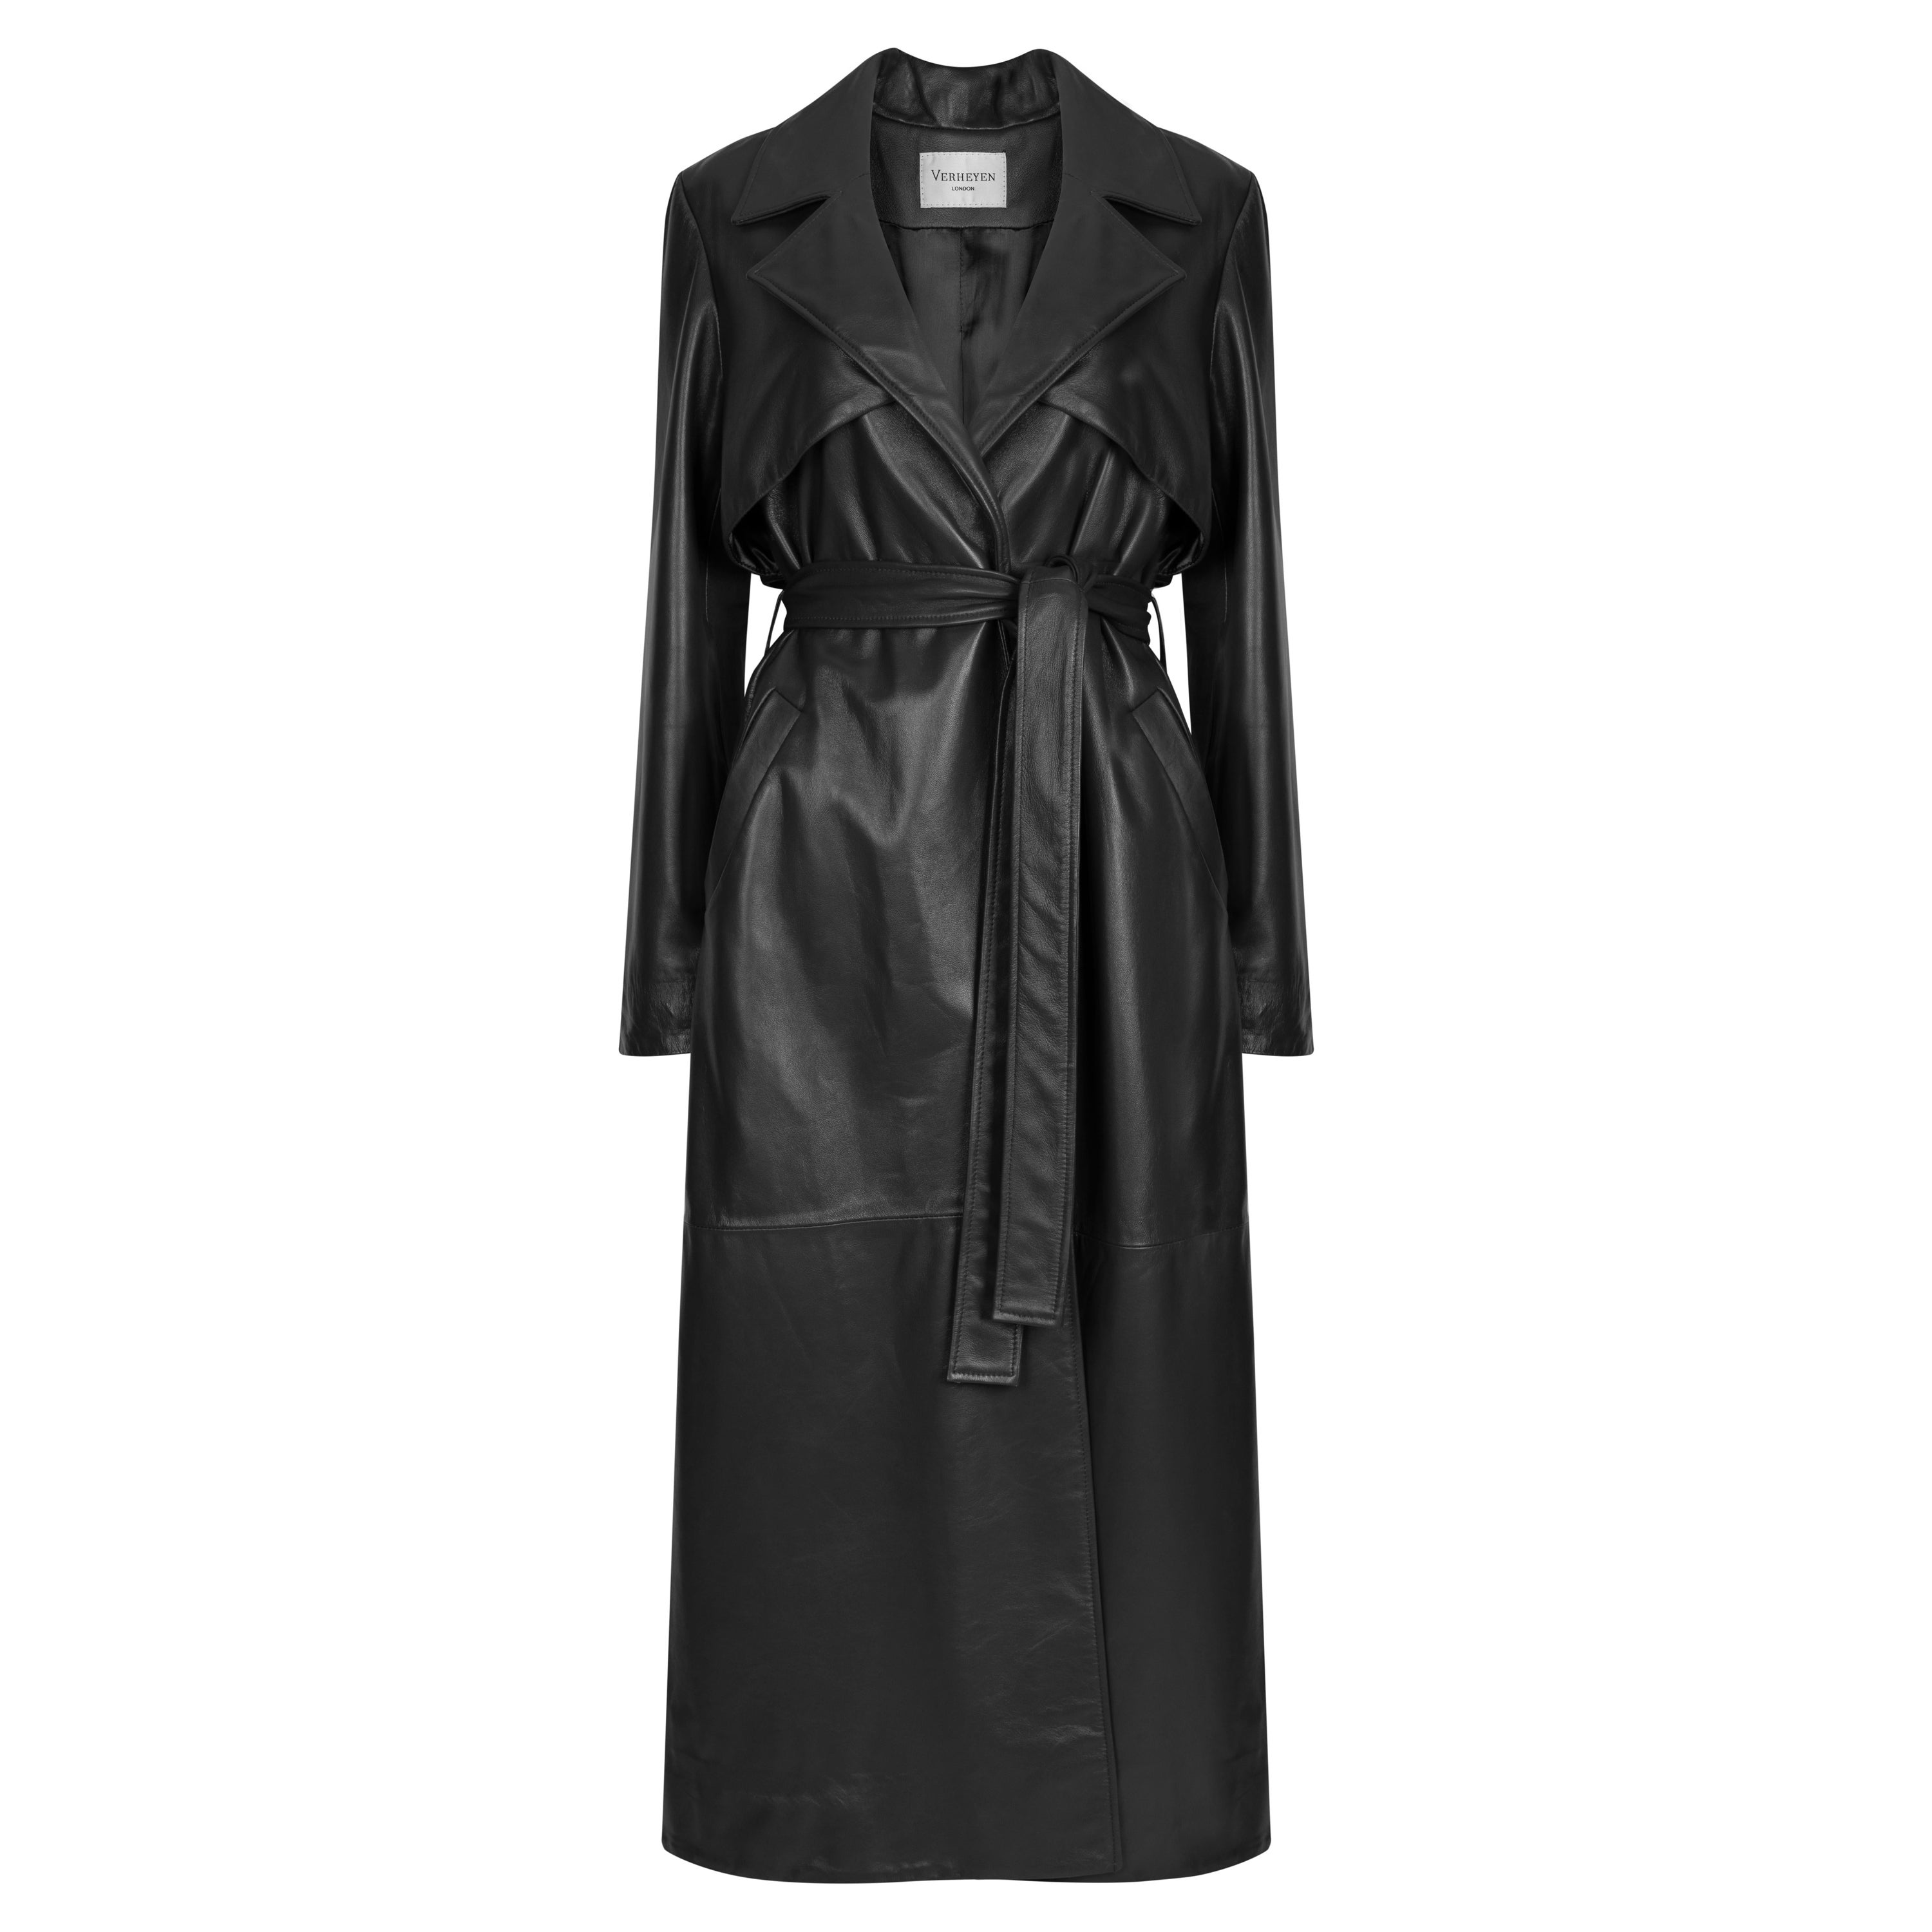 Verheyen London Leather Trench Coat in Black  - Size uk 16 For Sale